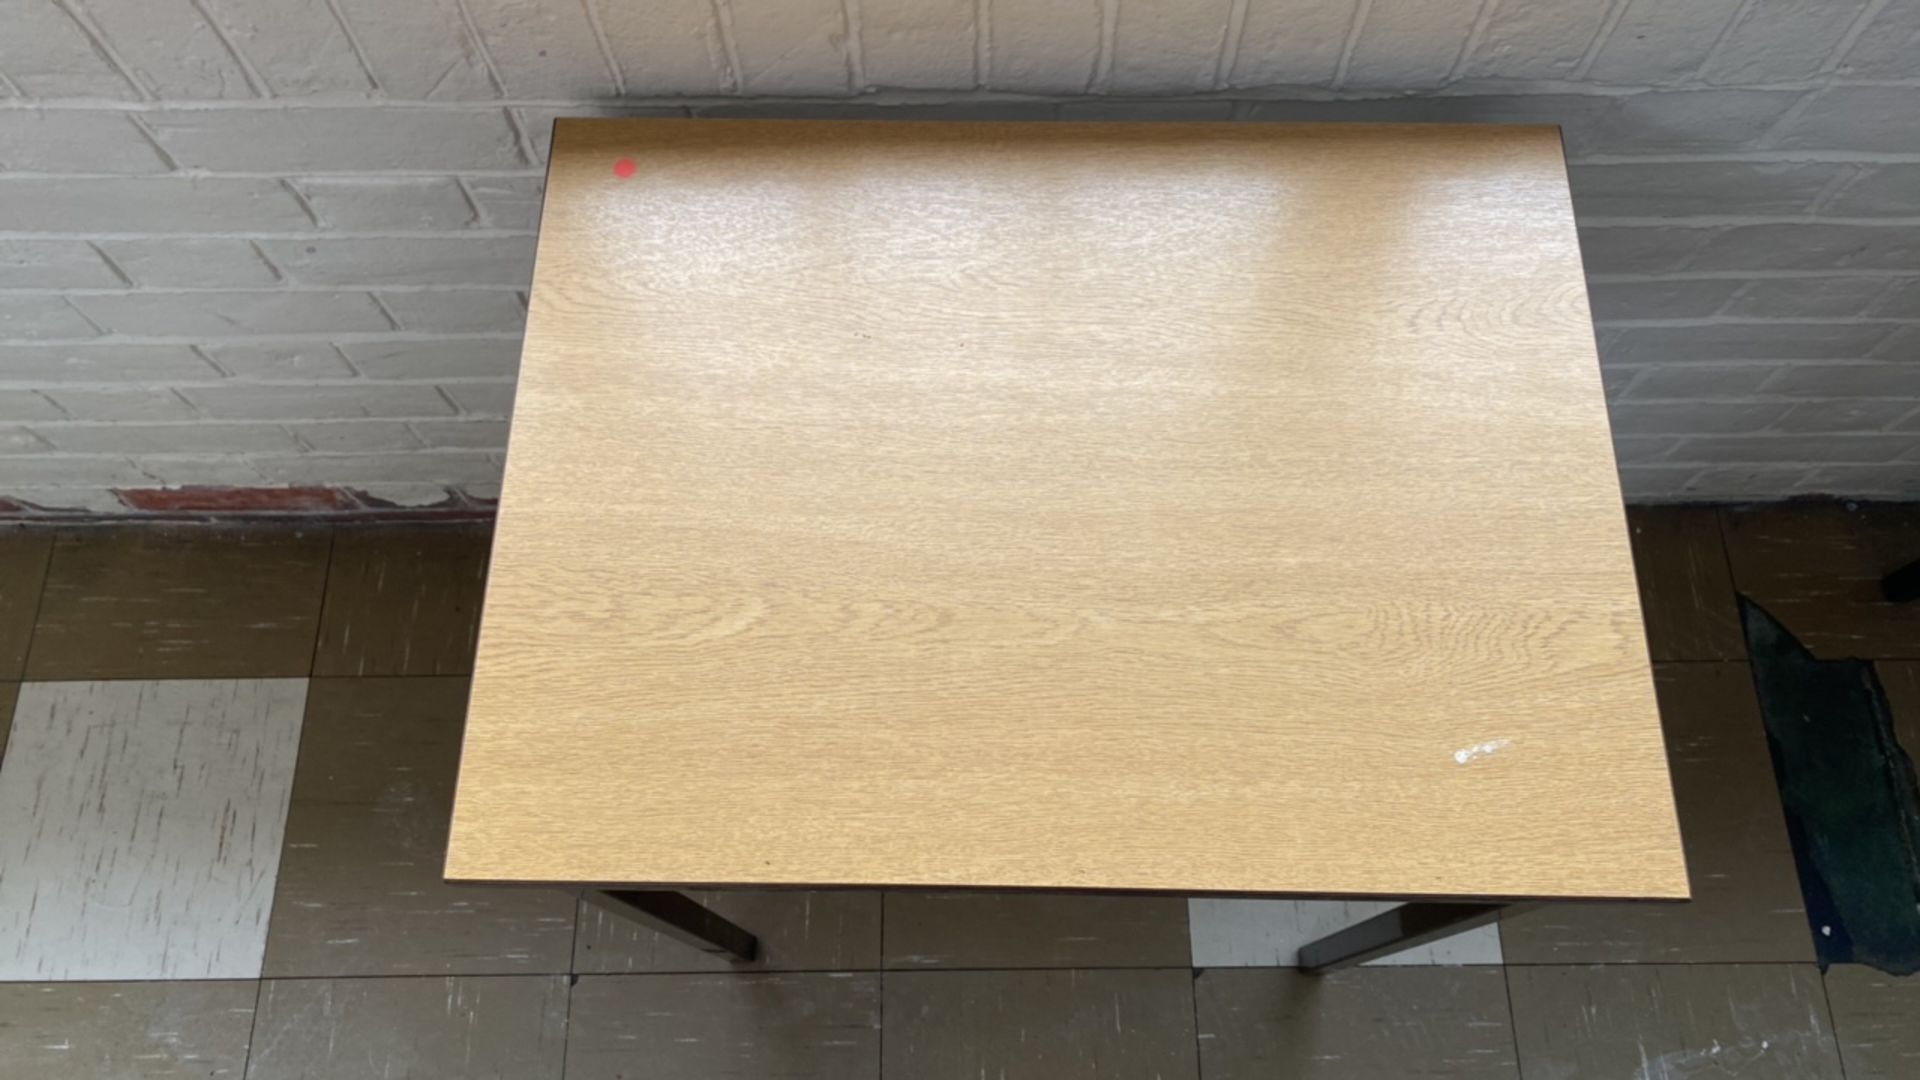 Set of 5 Brown Metal Framed Exam Tables (Brown Edge) - Image 3 of 4